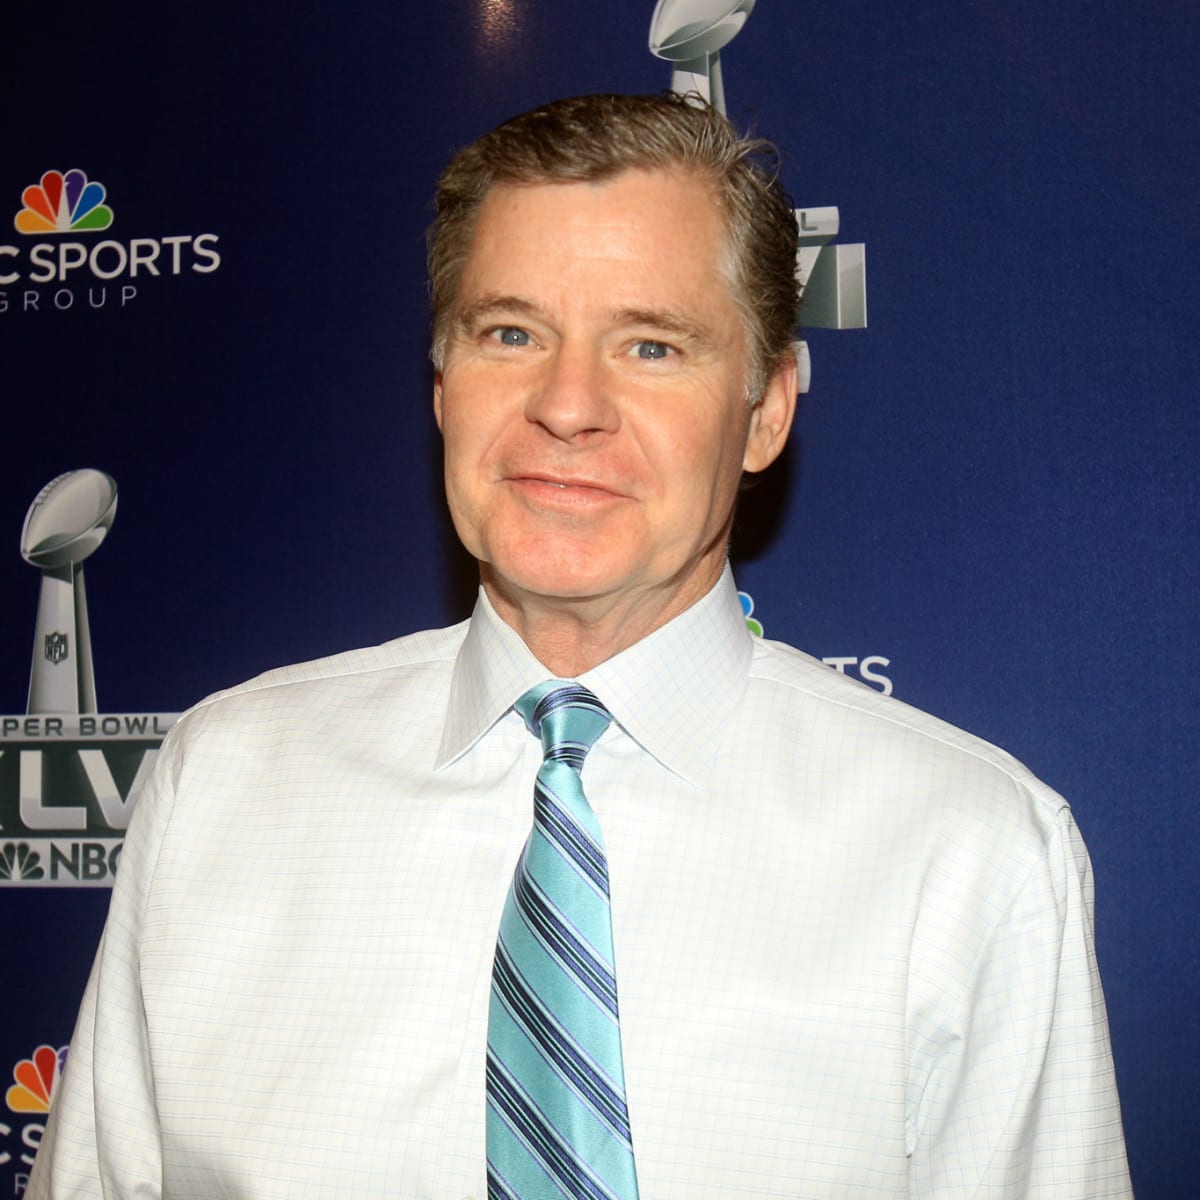 Dan Patrick won't return as NBC's 'Football Night in America' host